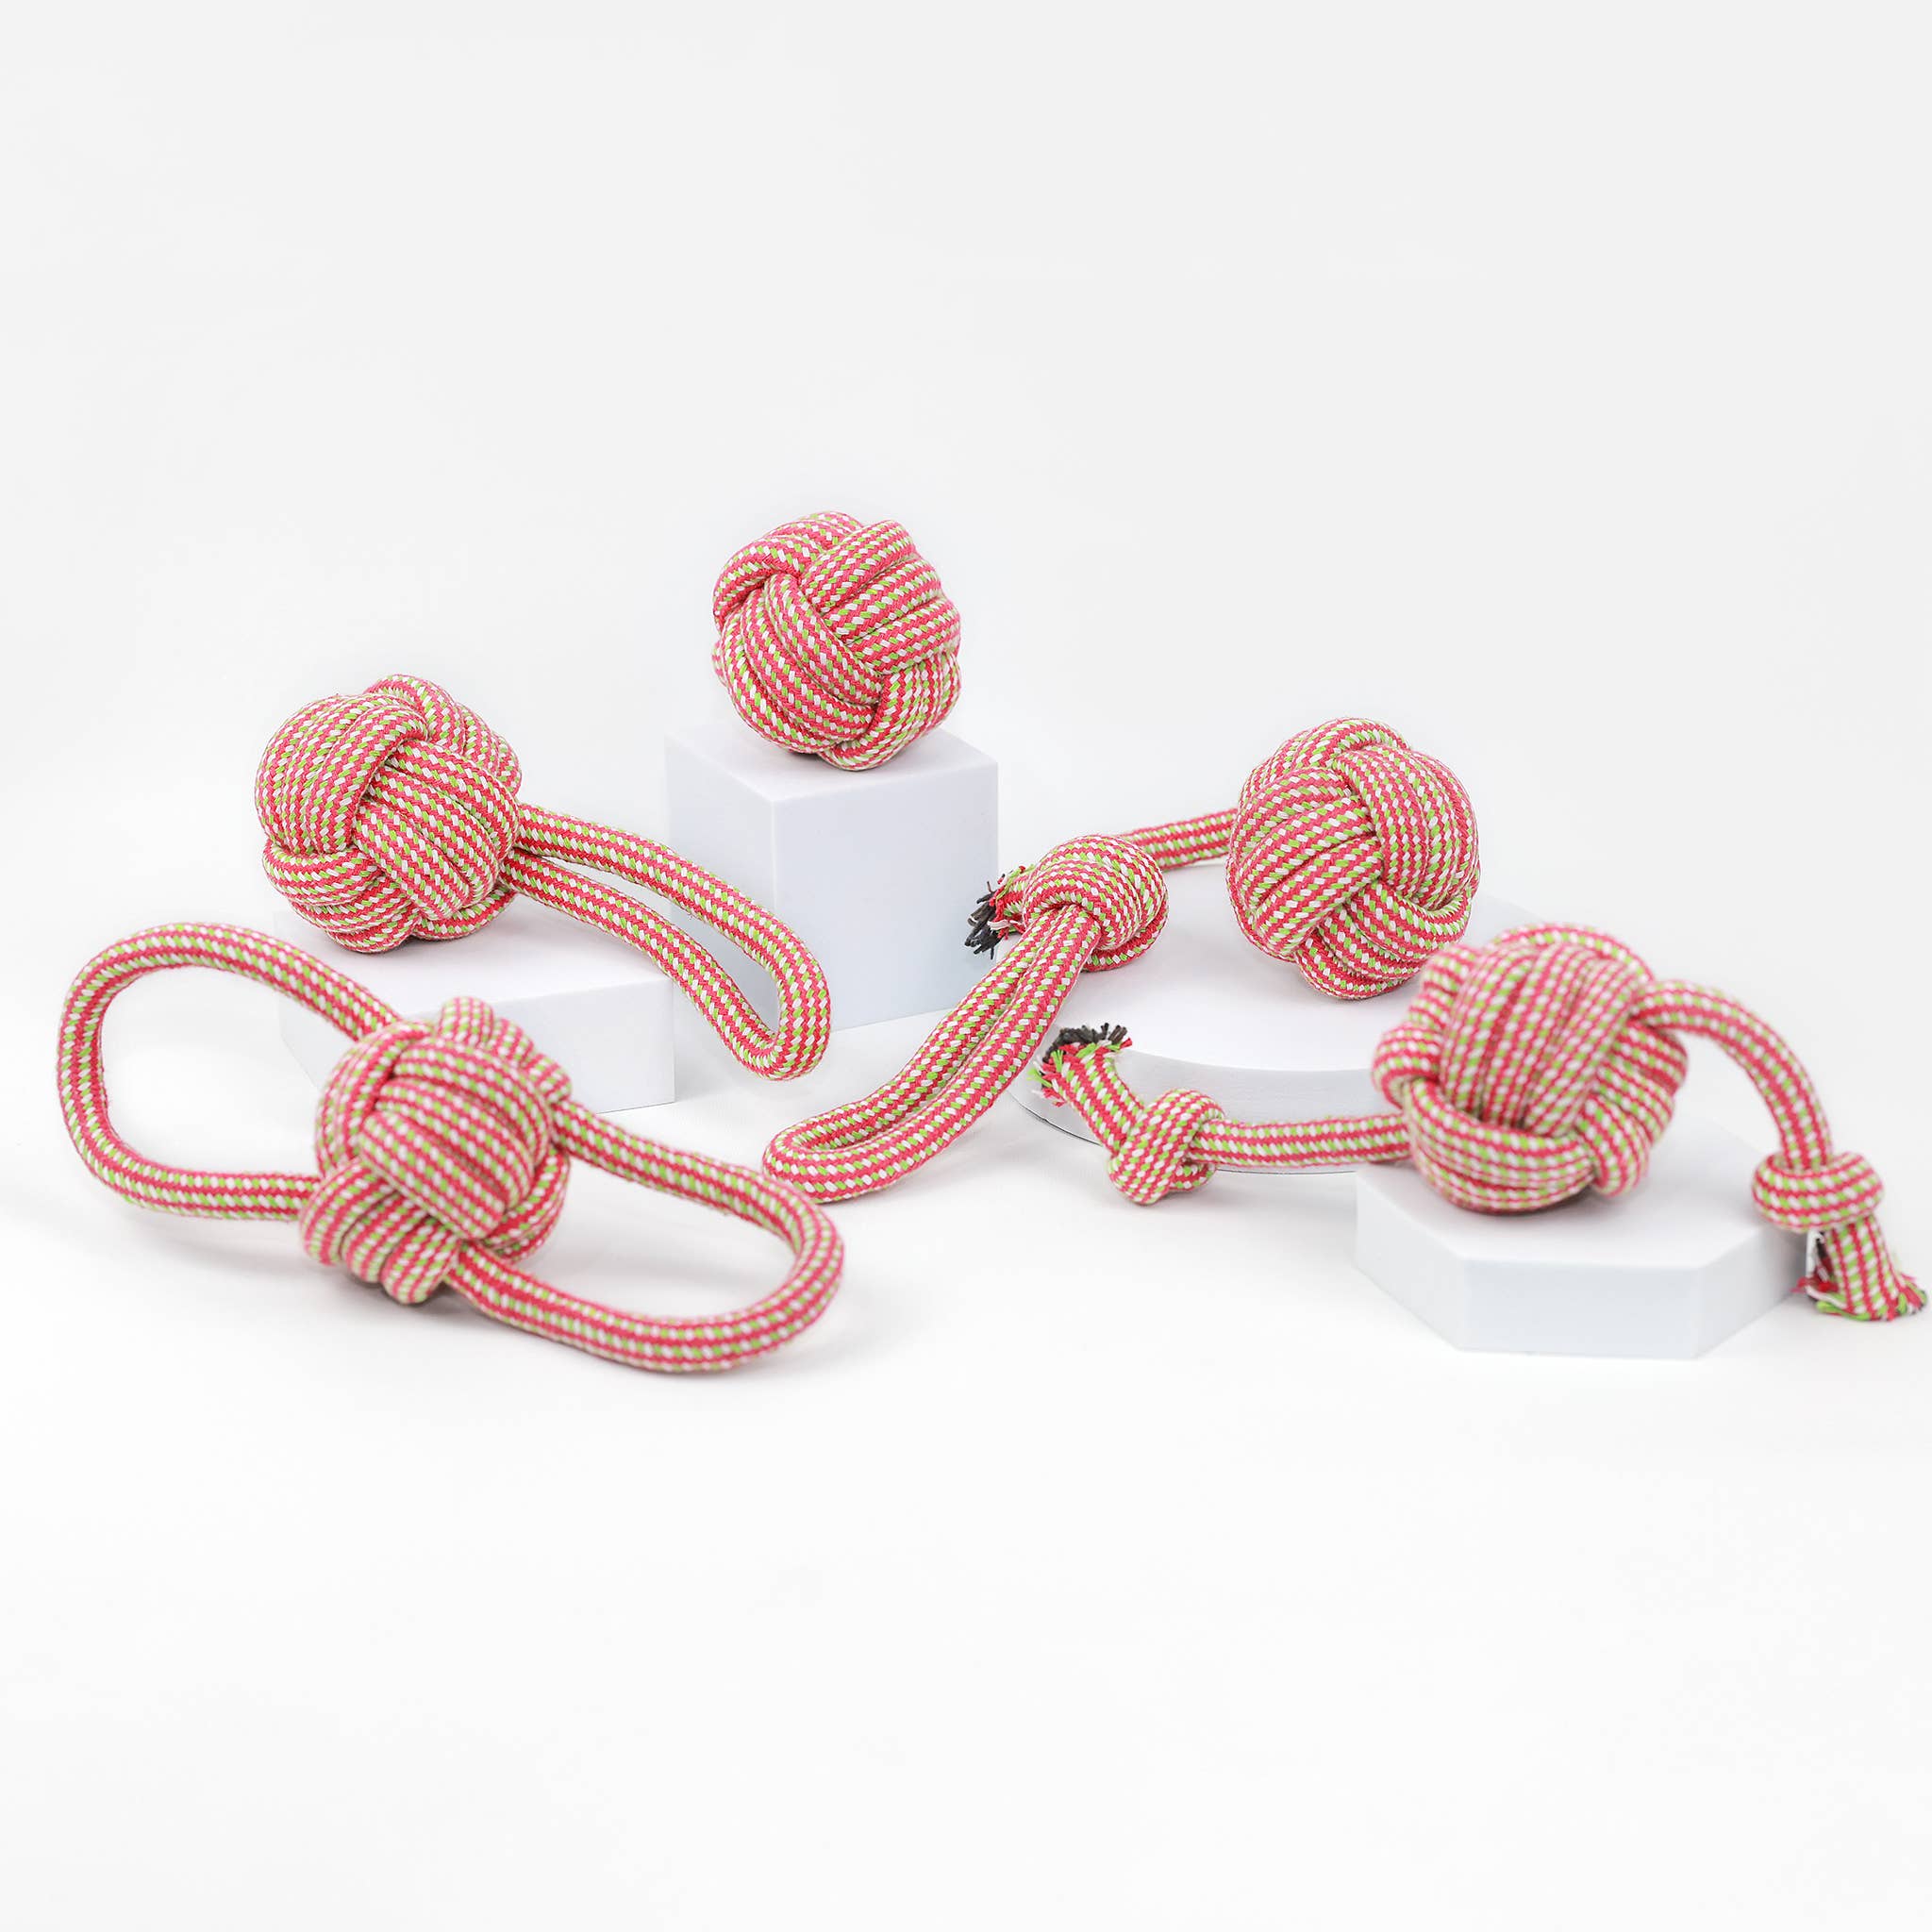 CSCORD International LLC - Pink and Green Tug Rope Toys | Handmade| Two Handles